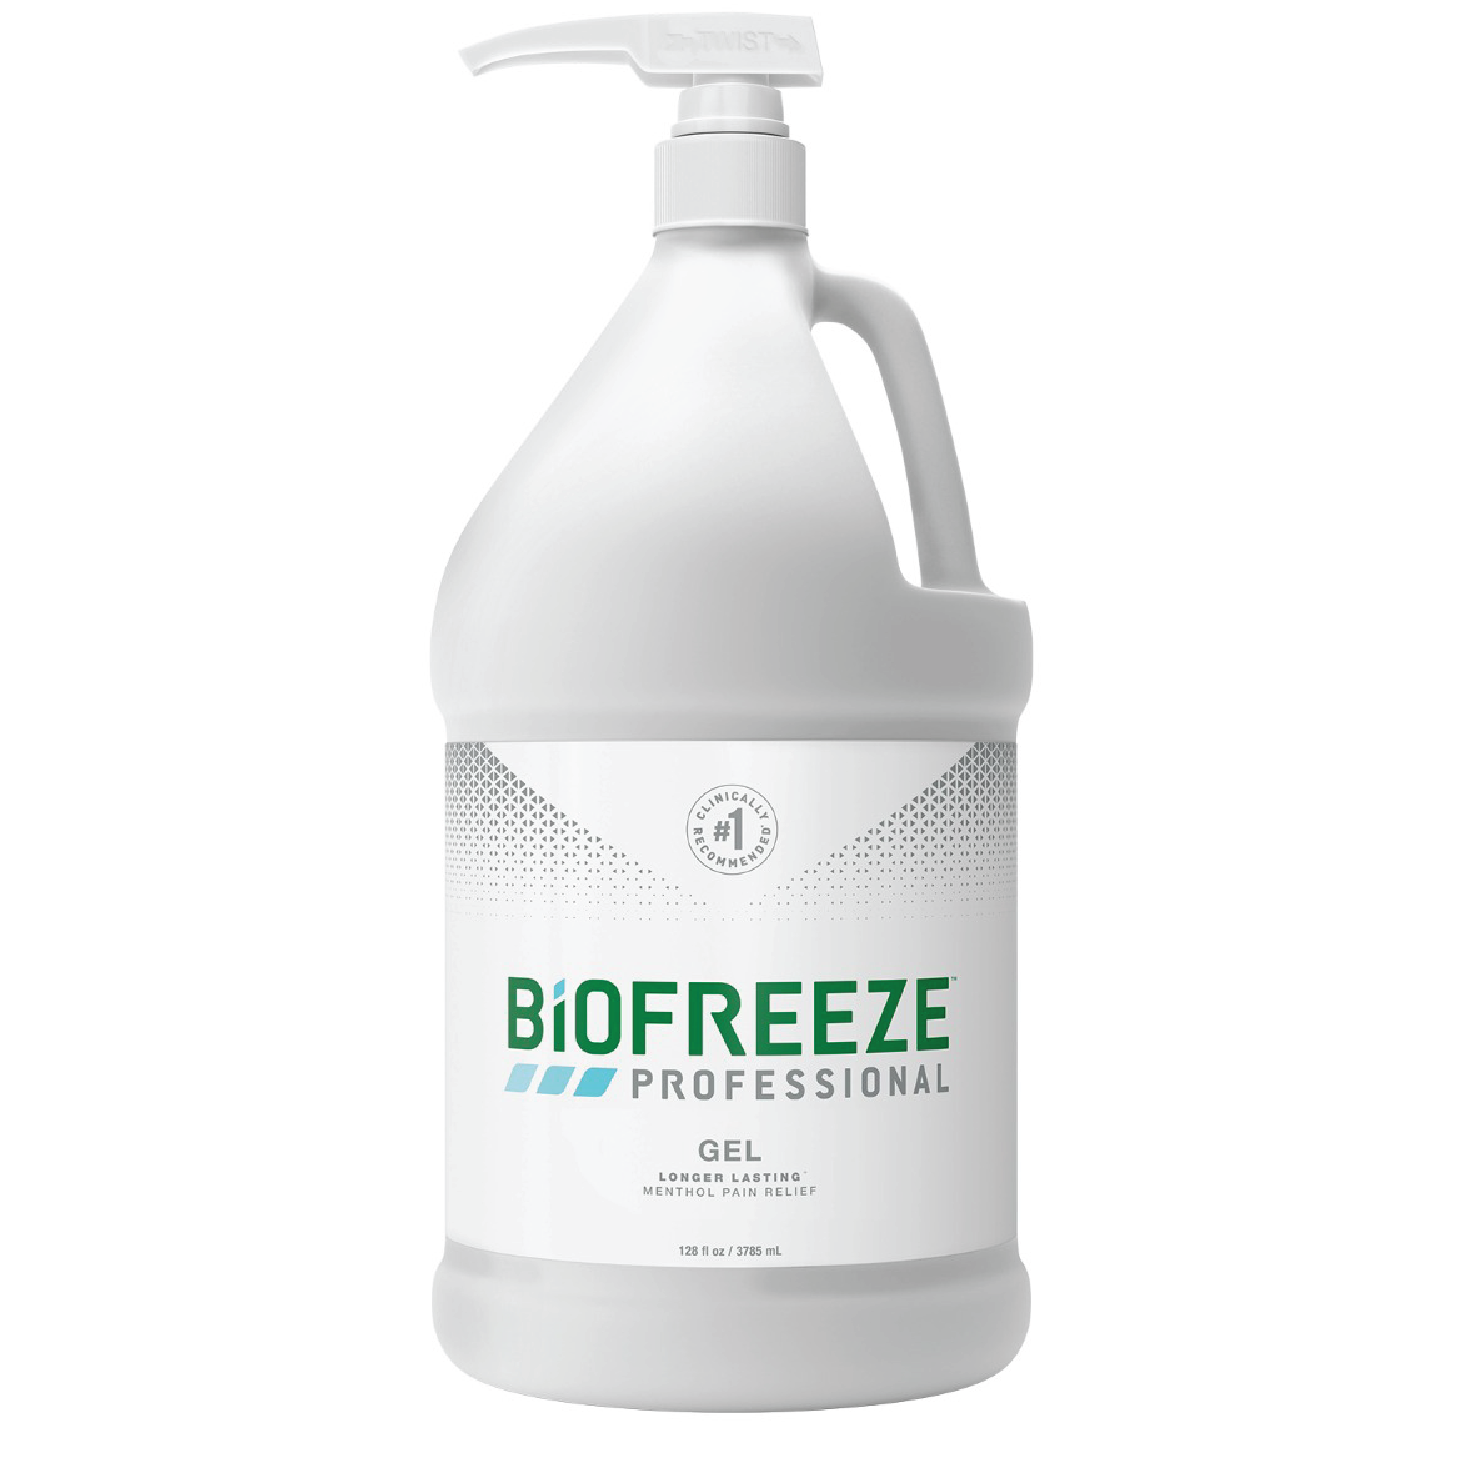 Biofreeze Professional Gallon Pump